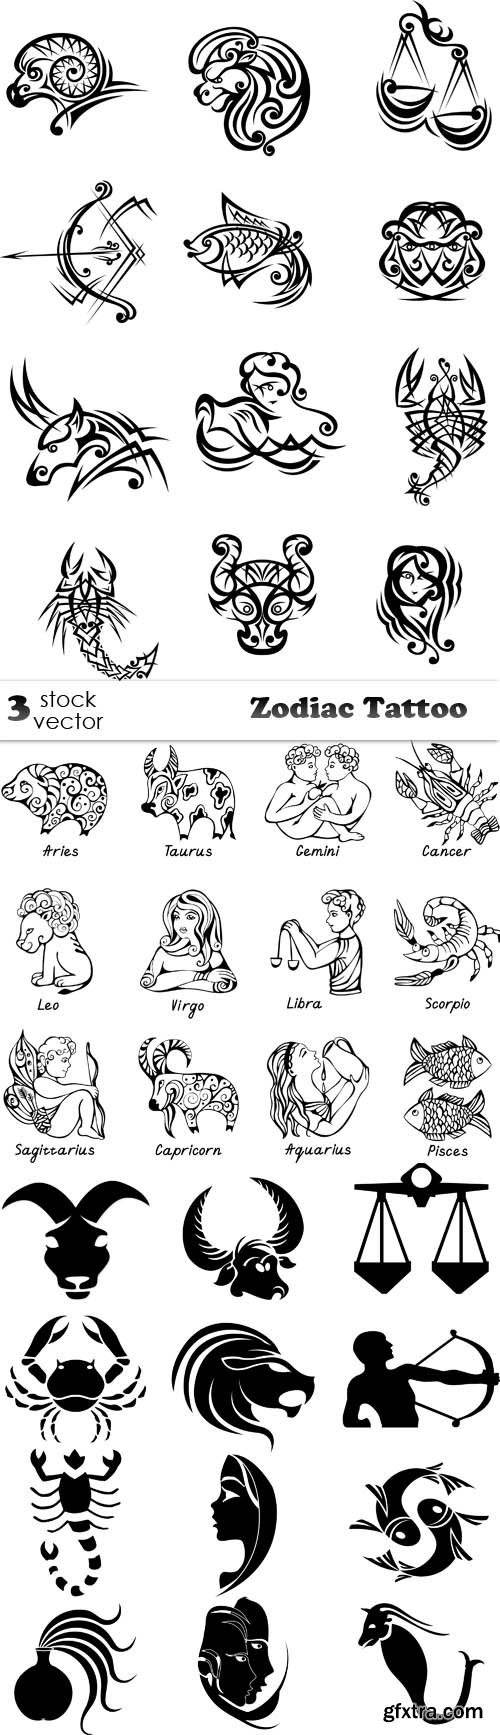 Vectors - Zodiac Tattoo